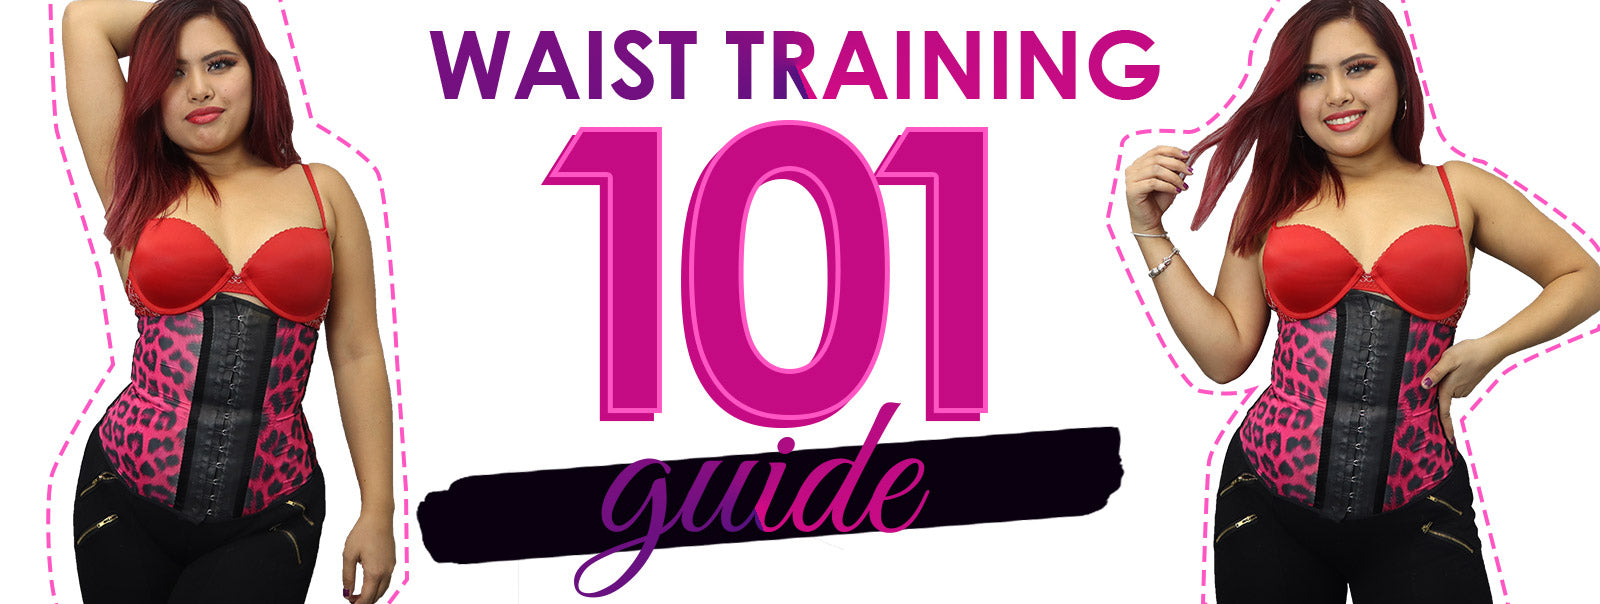 Best Waist Trainers | Waist Training 101 Guide